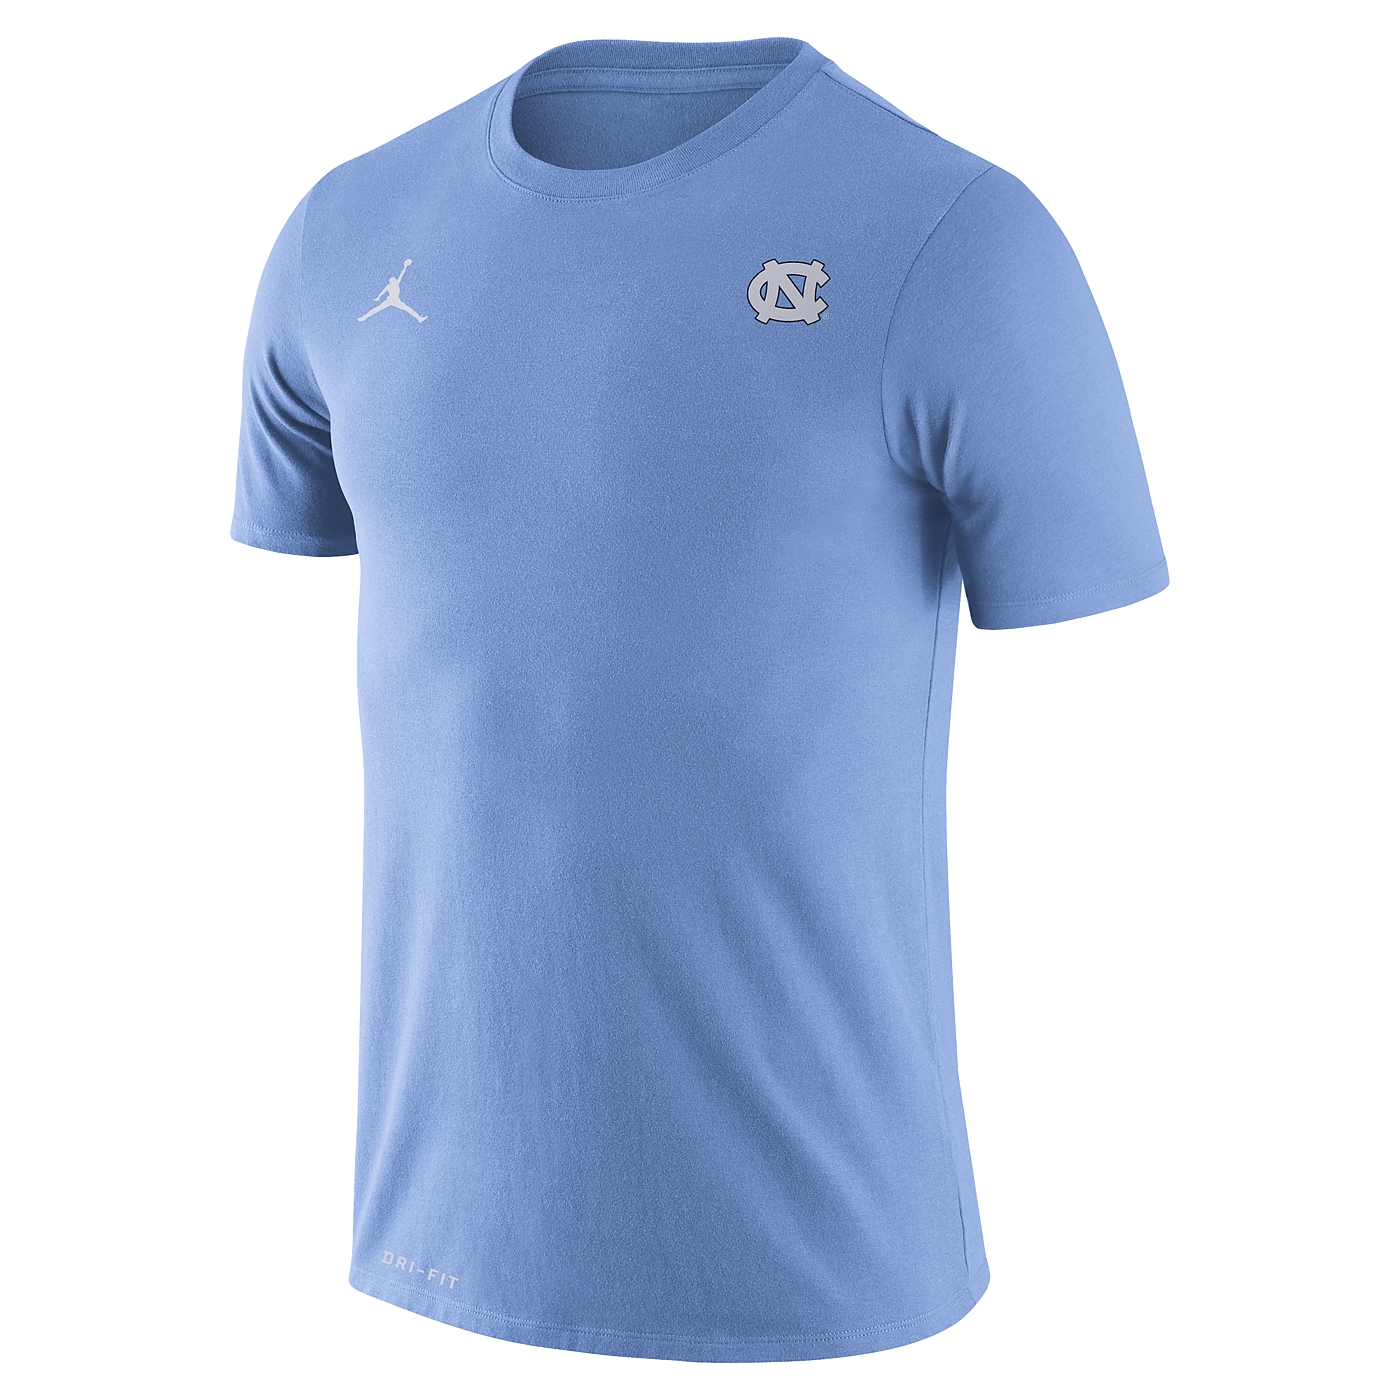 Johnny T-shirt - North Carolina Tar Heels - Nike Basketball Logo Legend T  (CB) by Nike